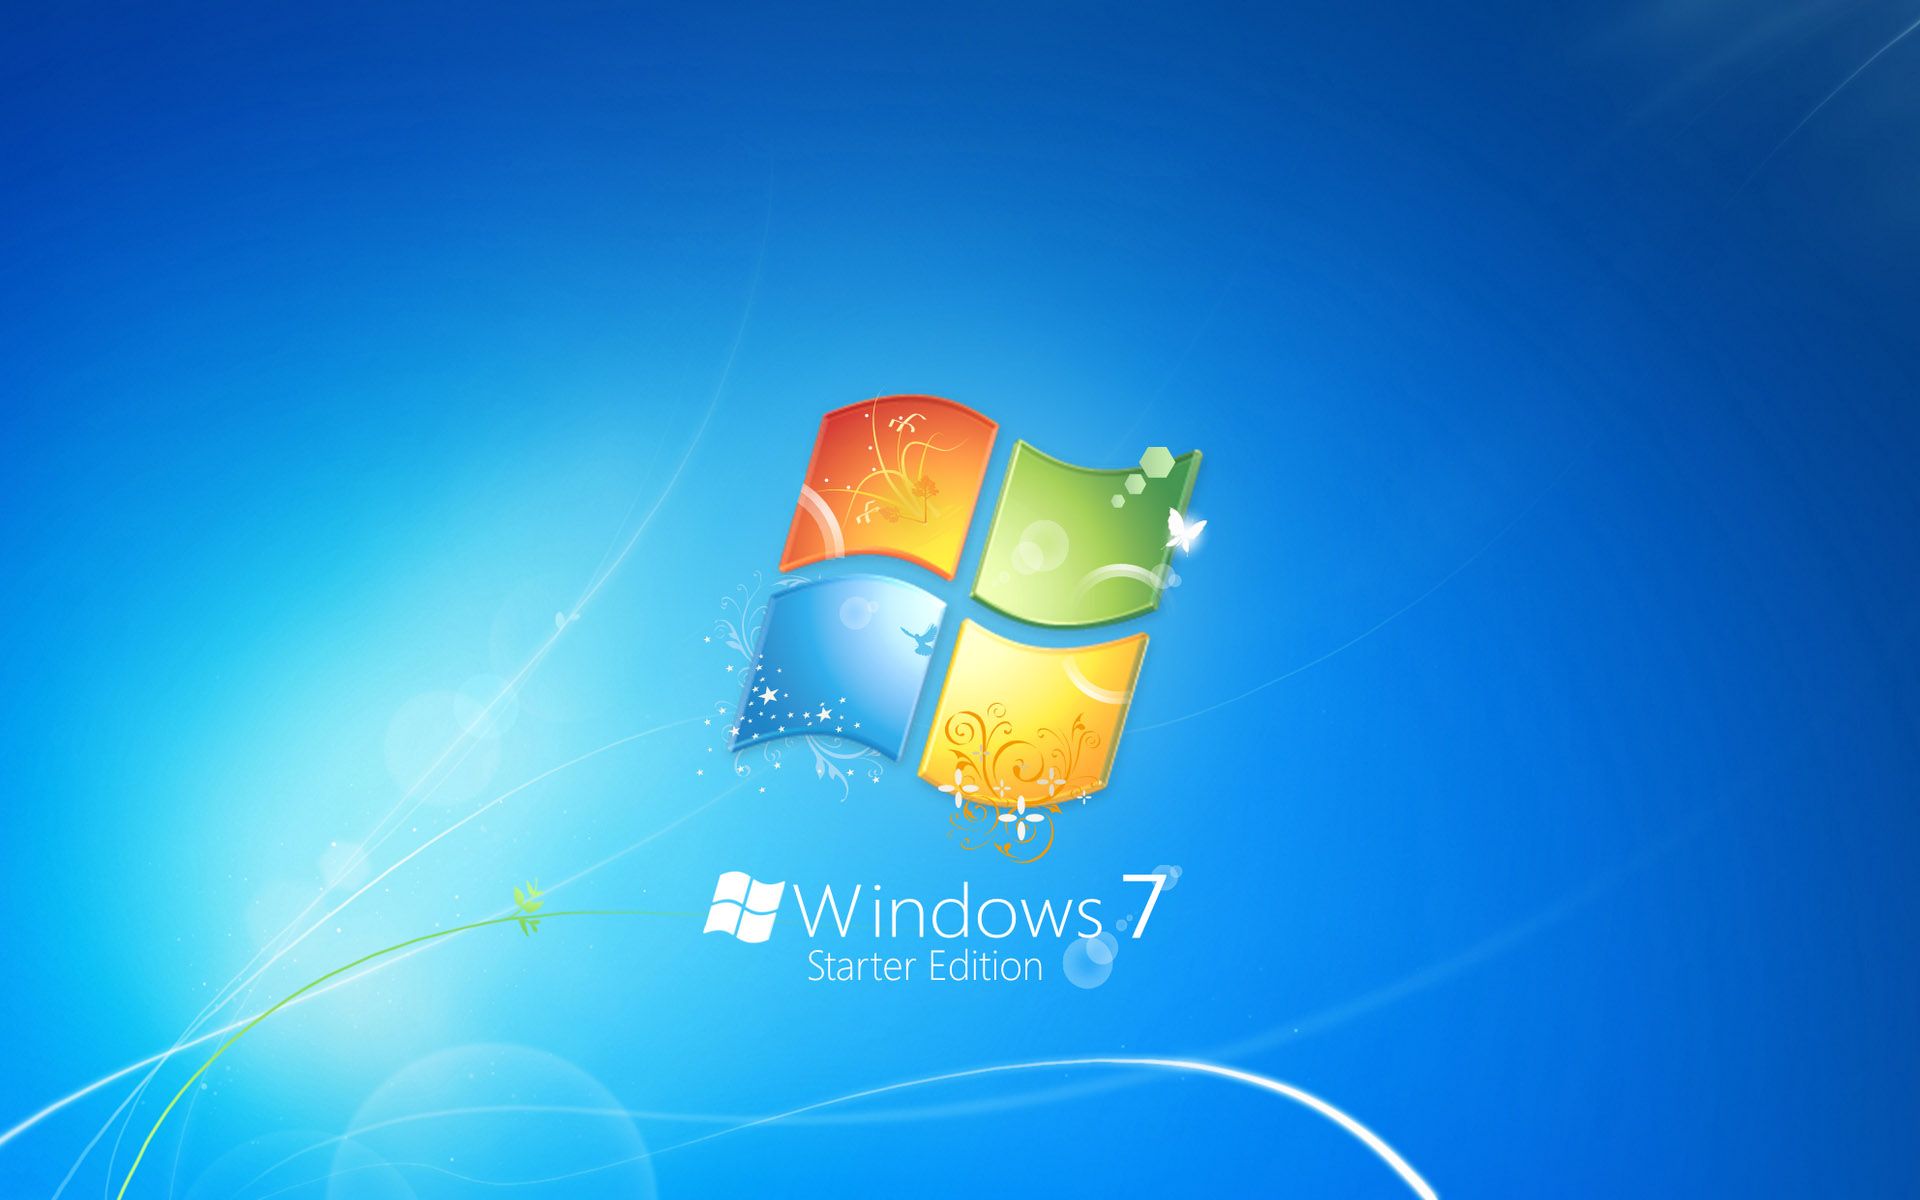 Windows 7 Starter Edition wallpaper HD. Free desktop background